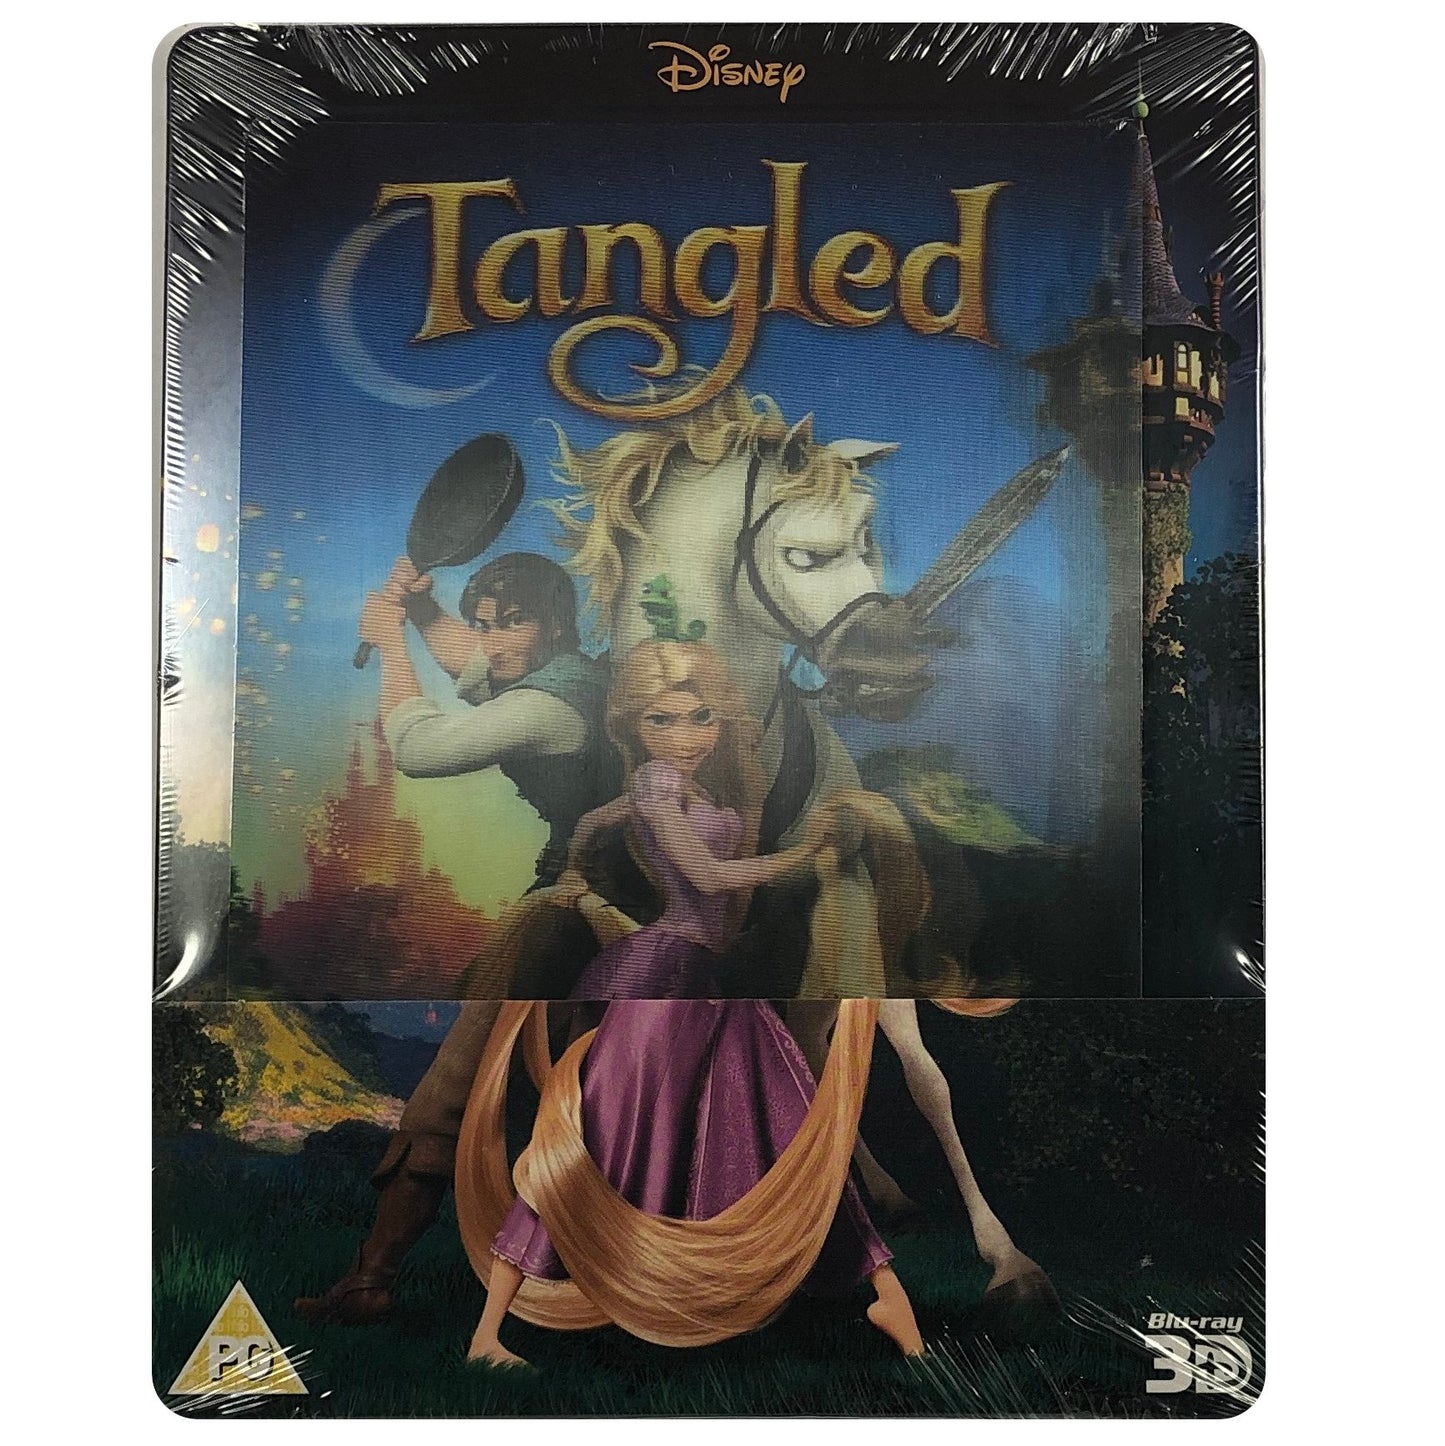 Tangled Lenticular Blu-Ray Steelbook